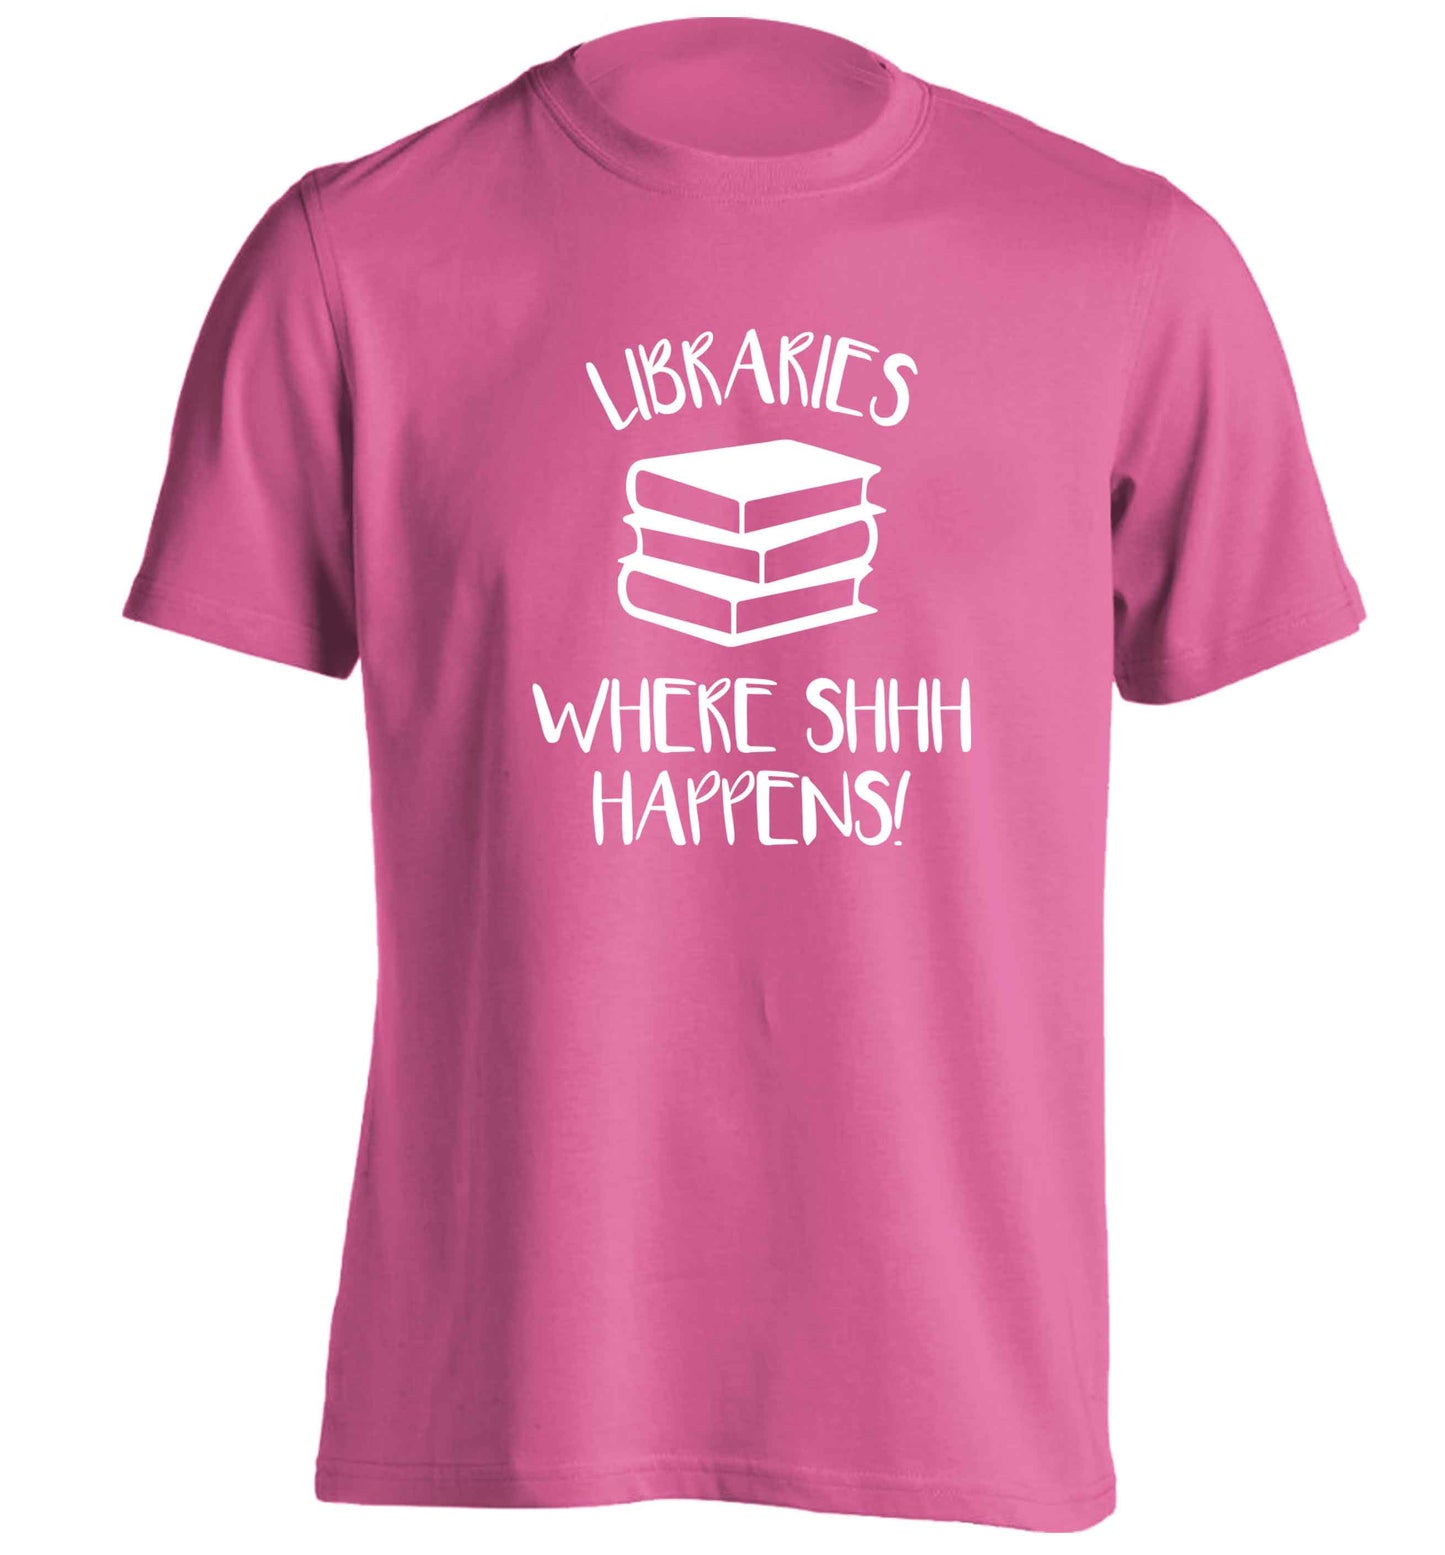 Libraries where shh happens! adults unisex pink Tshirt 2XL